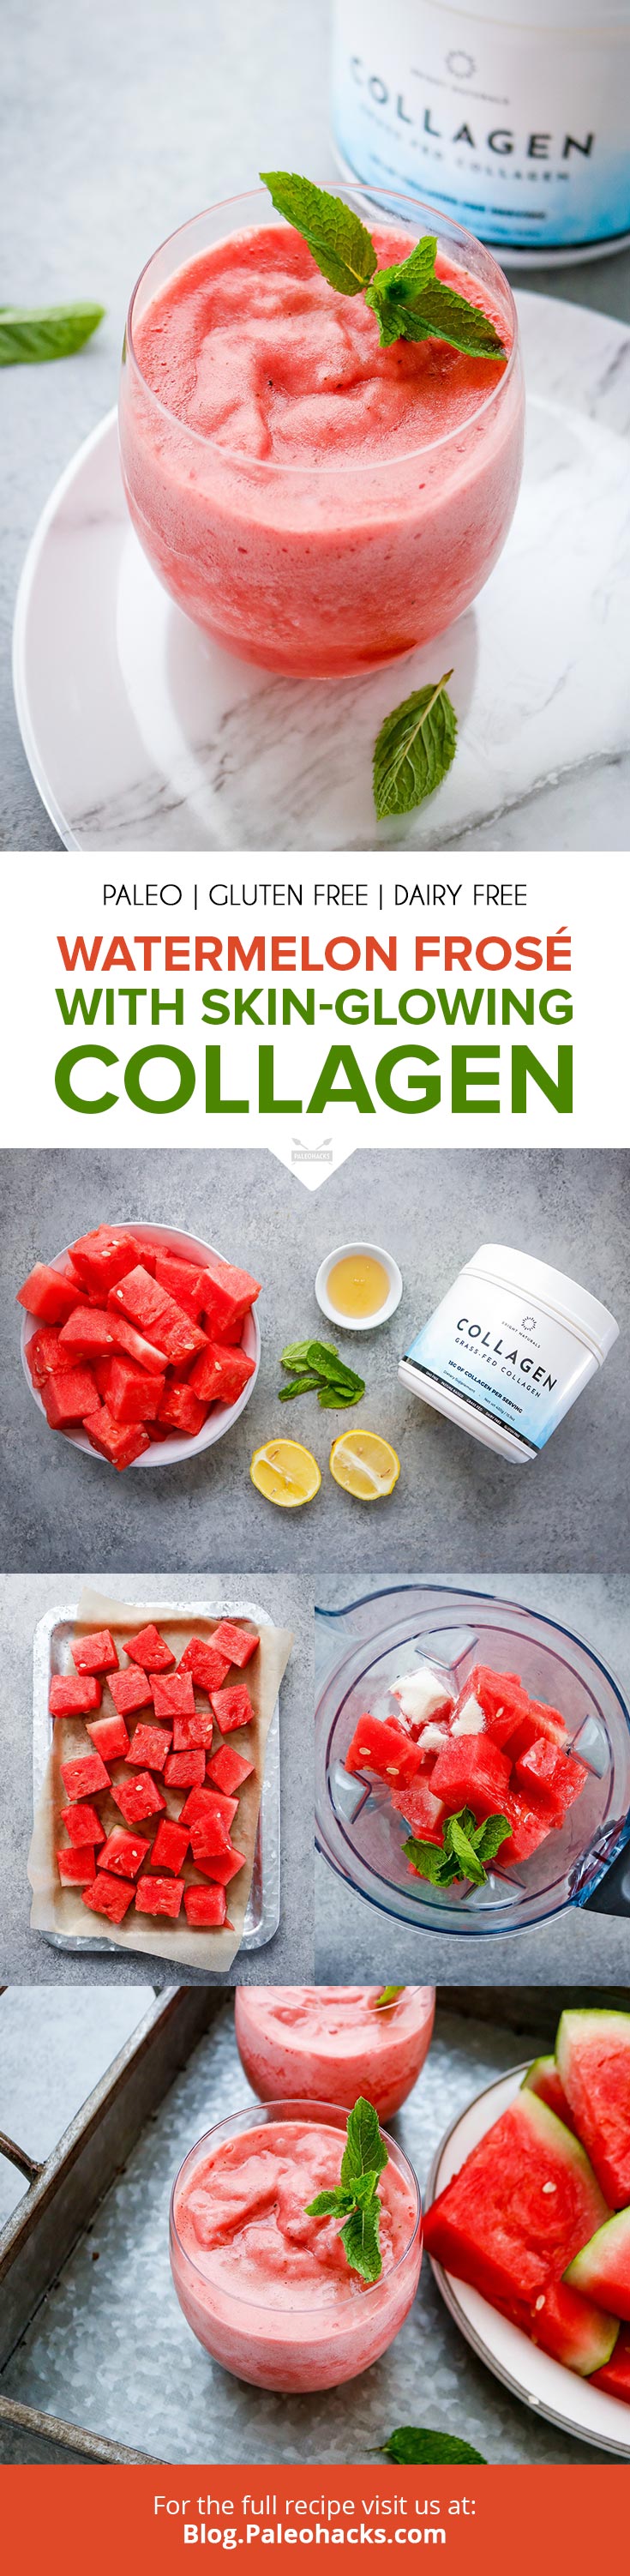 Watermelon frosé with collagen 